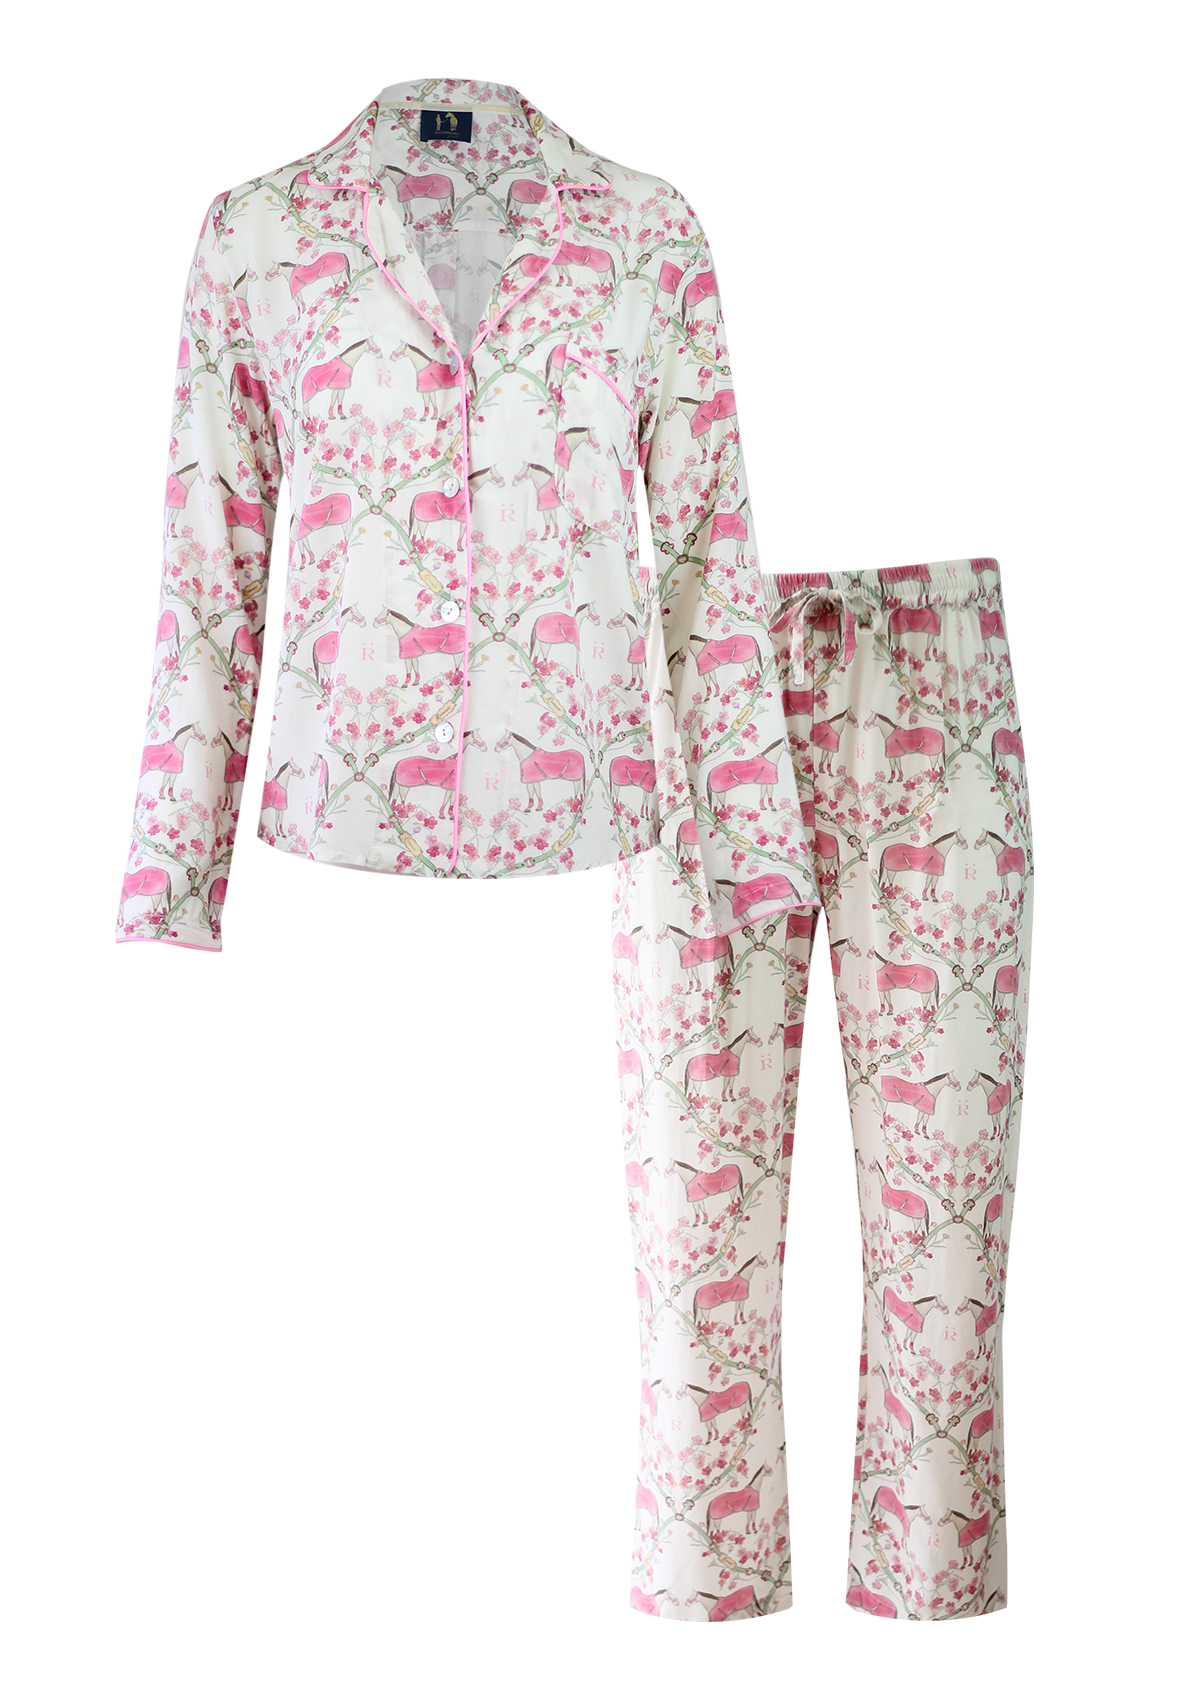 Hoofbeat Dreams PJ’s Set | Pink | Equestrian Sleepwear Collection